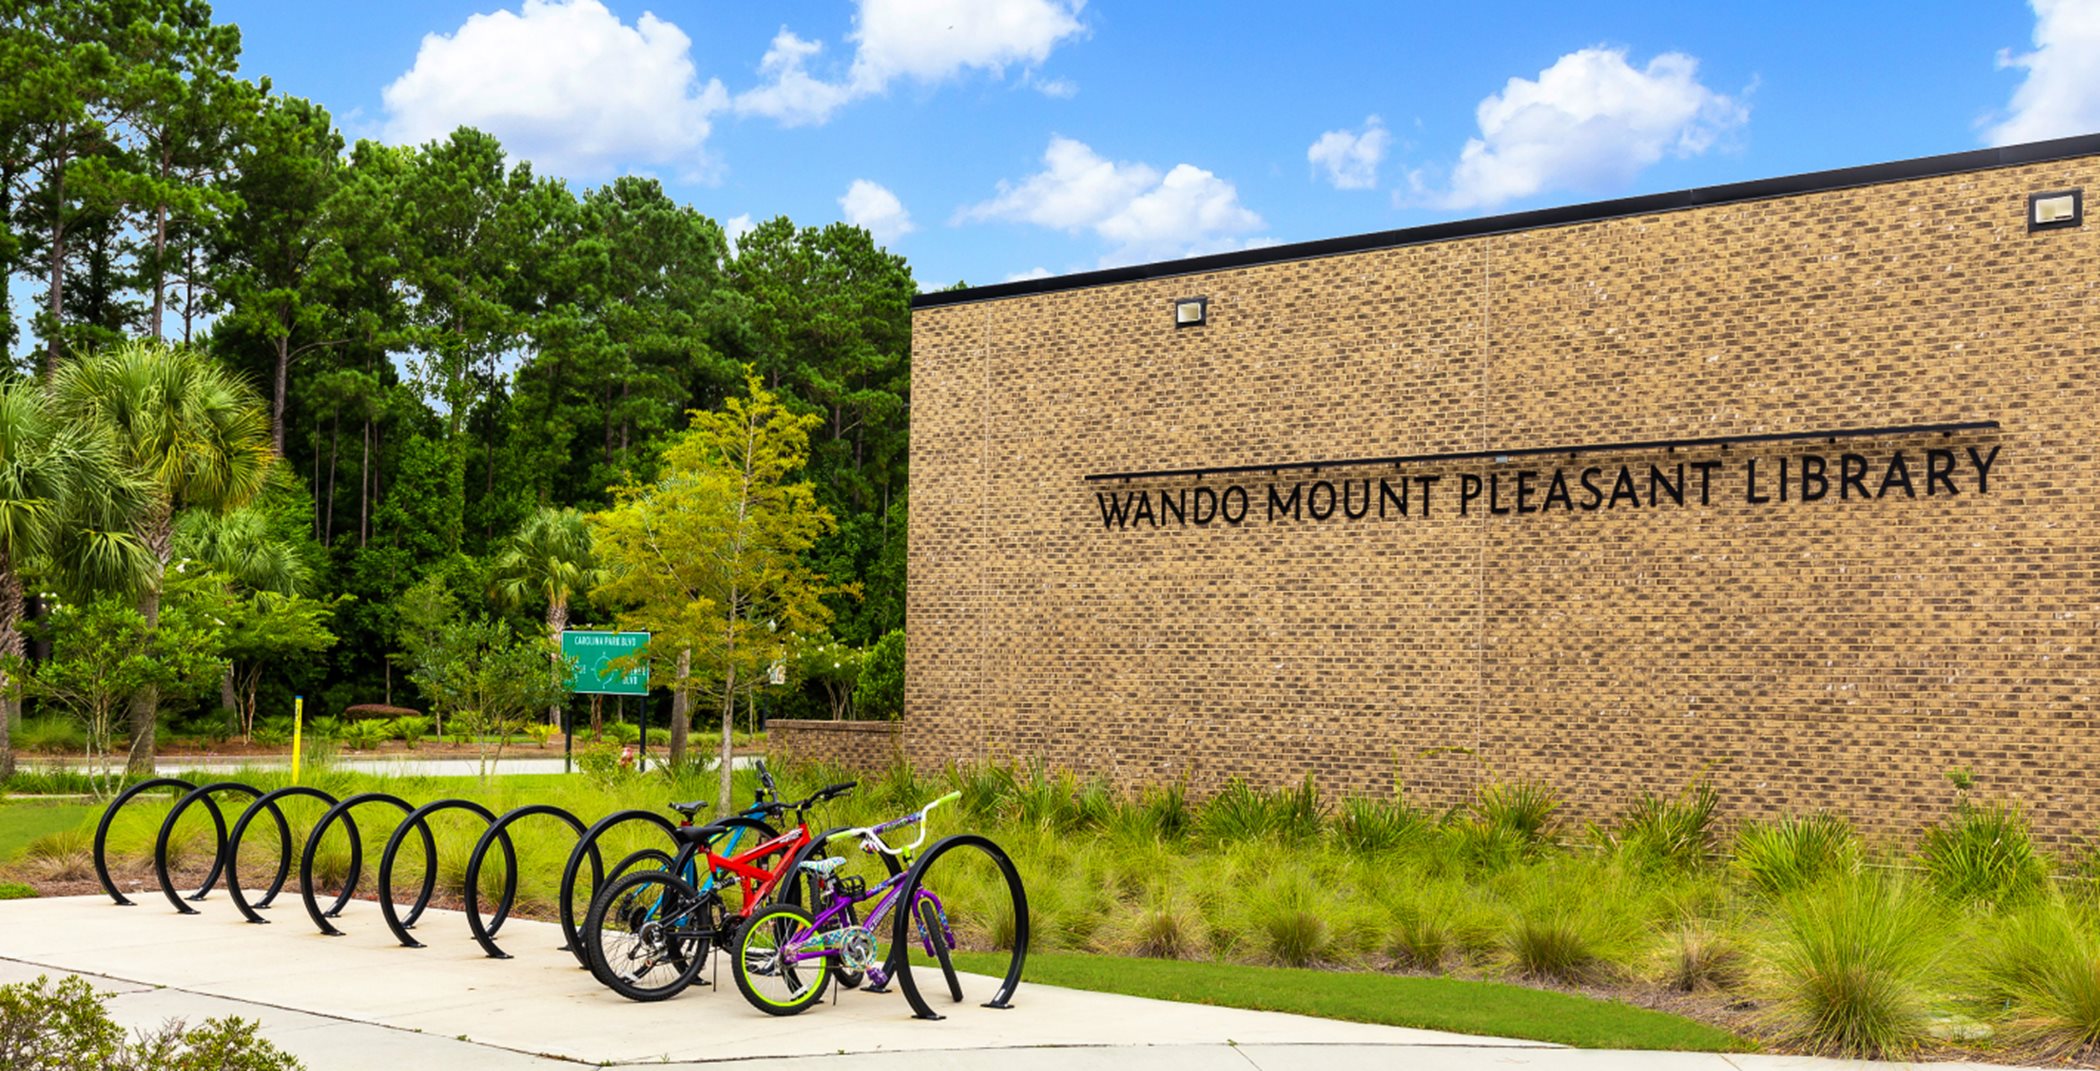 Wando Mount Pleasant Library